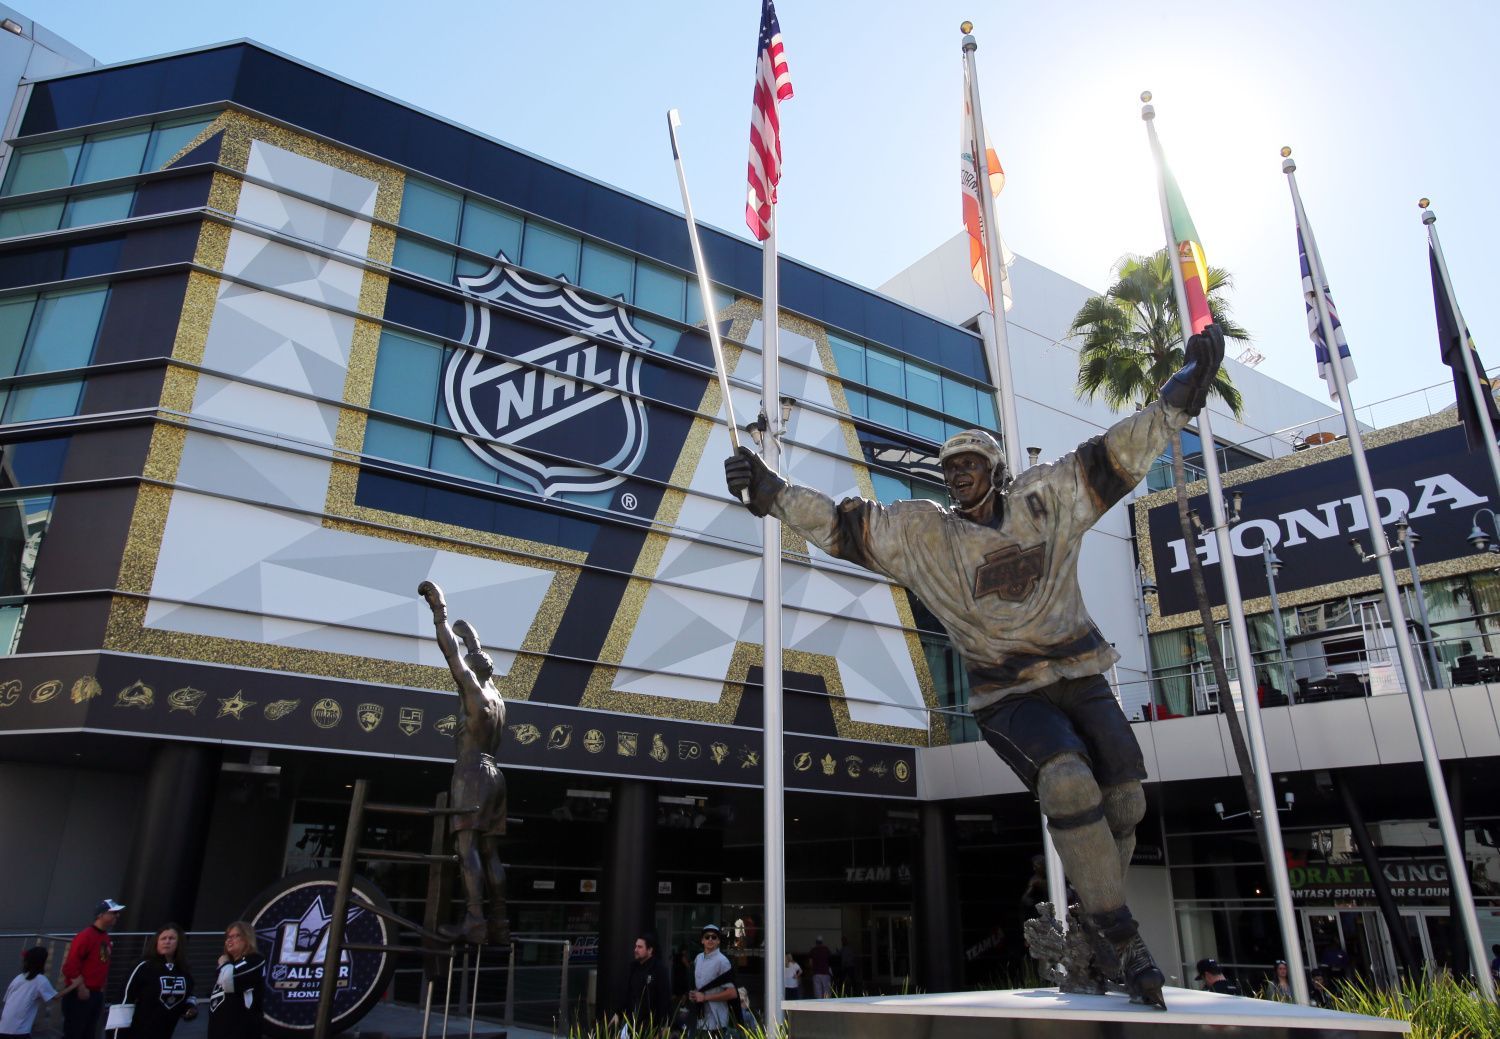 2017 NHL All Star Game: socha Wayna Gretzkyho před Staples Center v Los Angeles